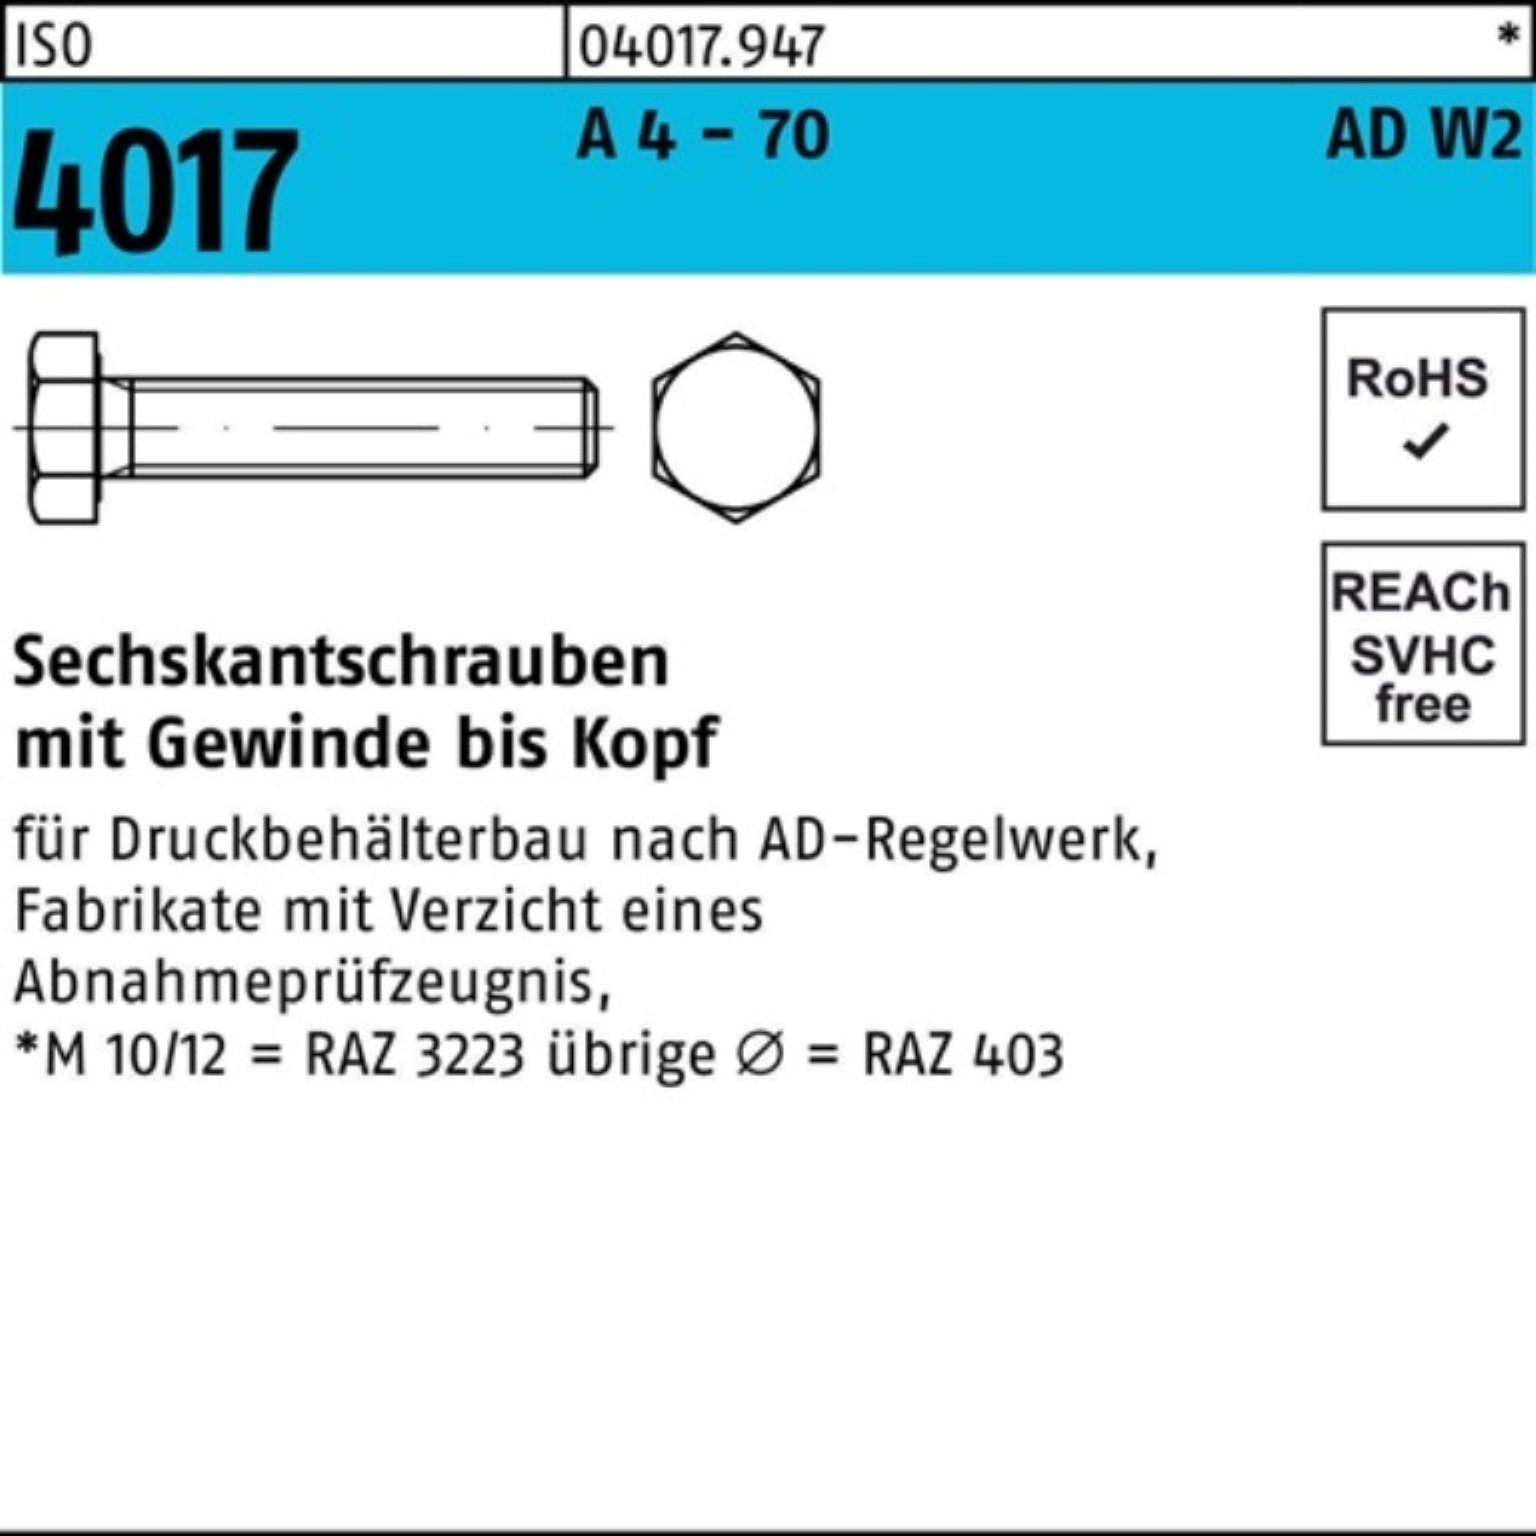 Bufab Sechskantschraube 100er Pack Sechskantschraube ISO 4017 VG M12x 30 A 4 - 70 AD-W2 50 St